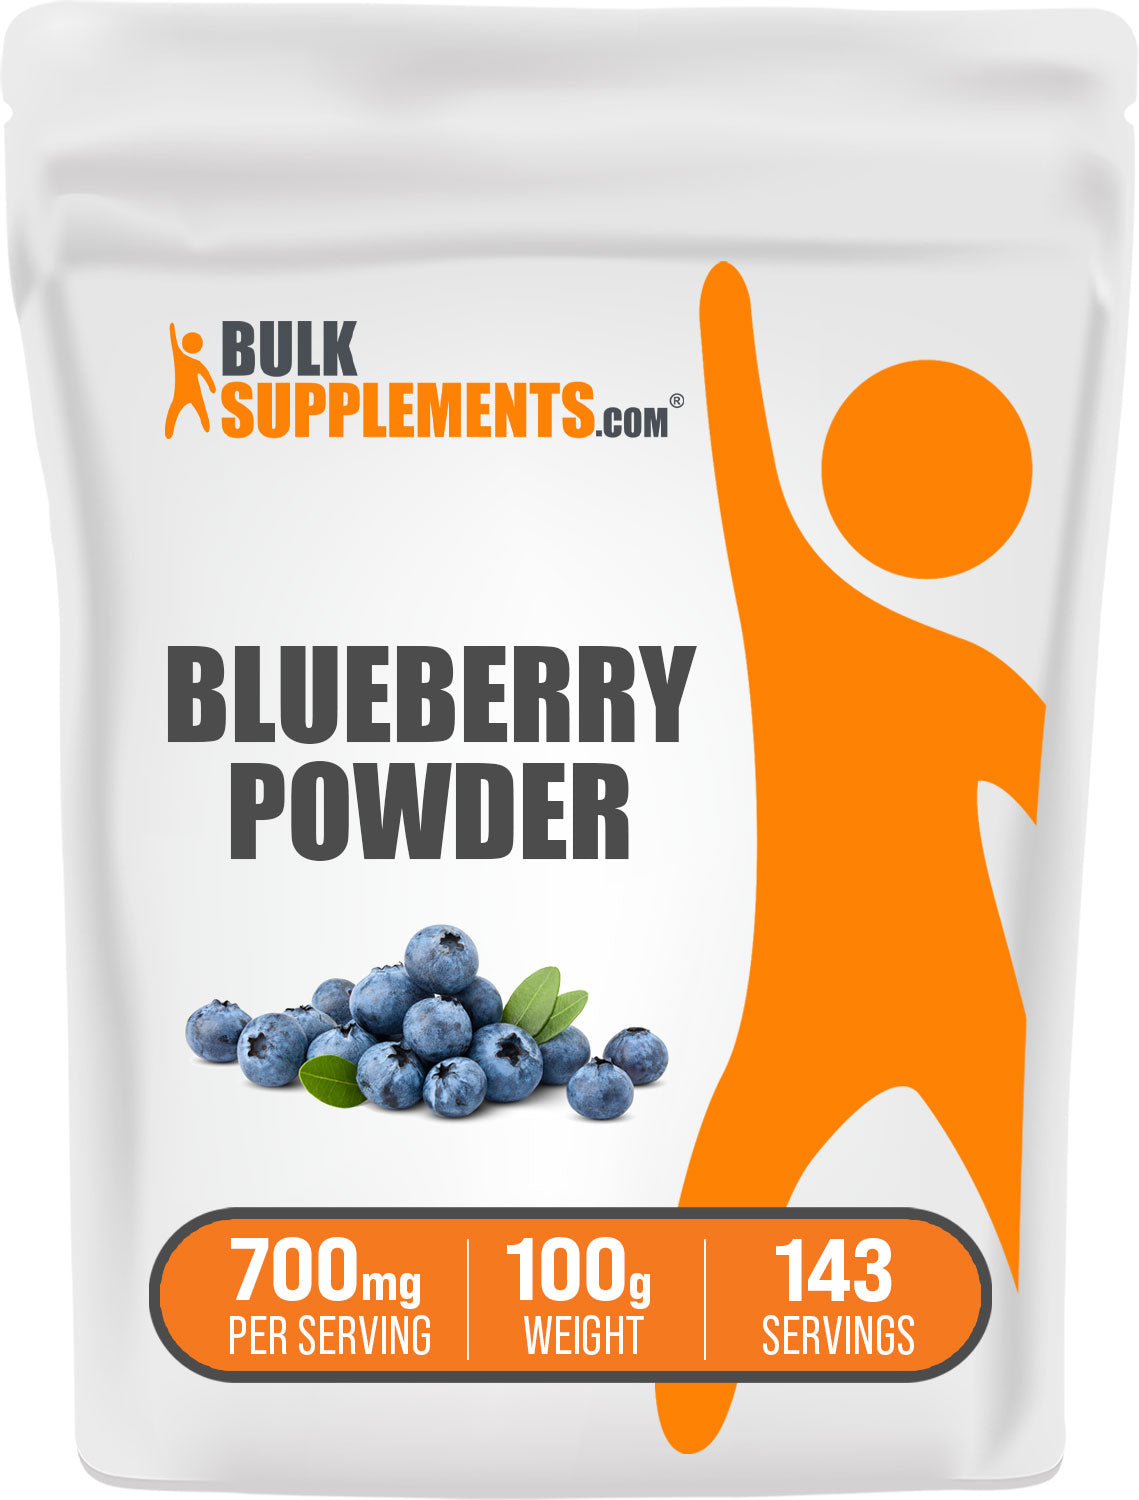 100g of Blueberry Powder